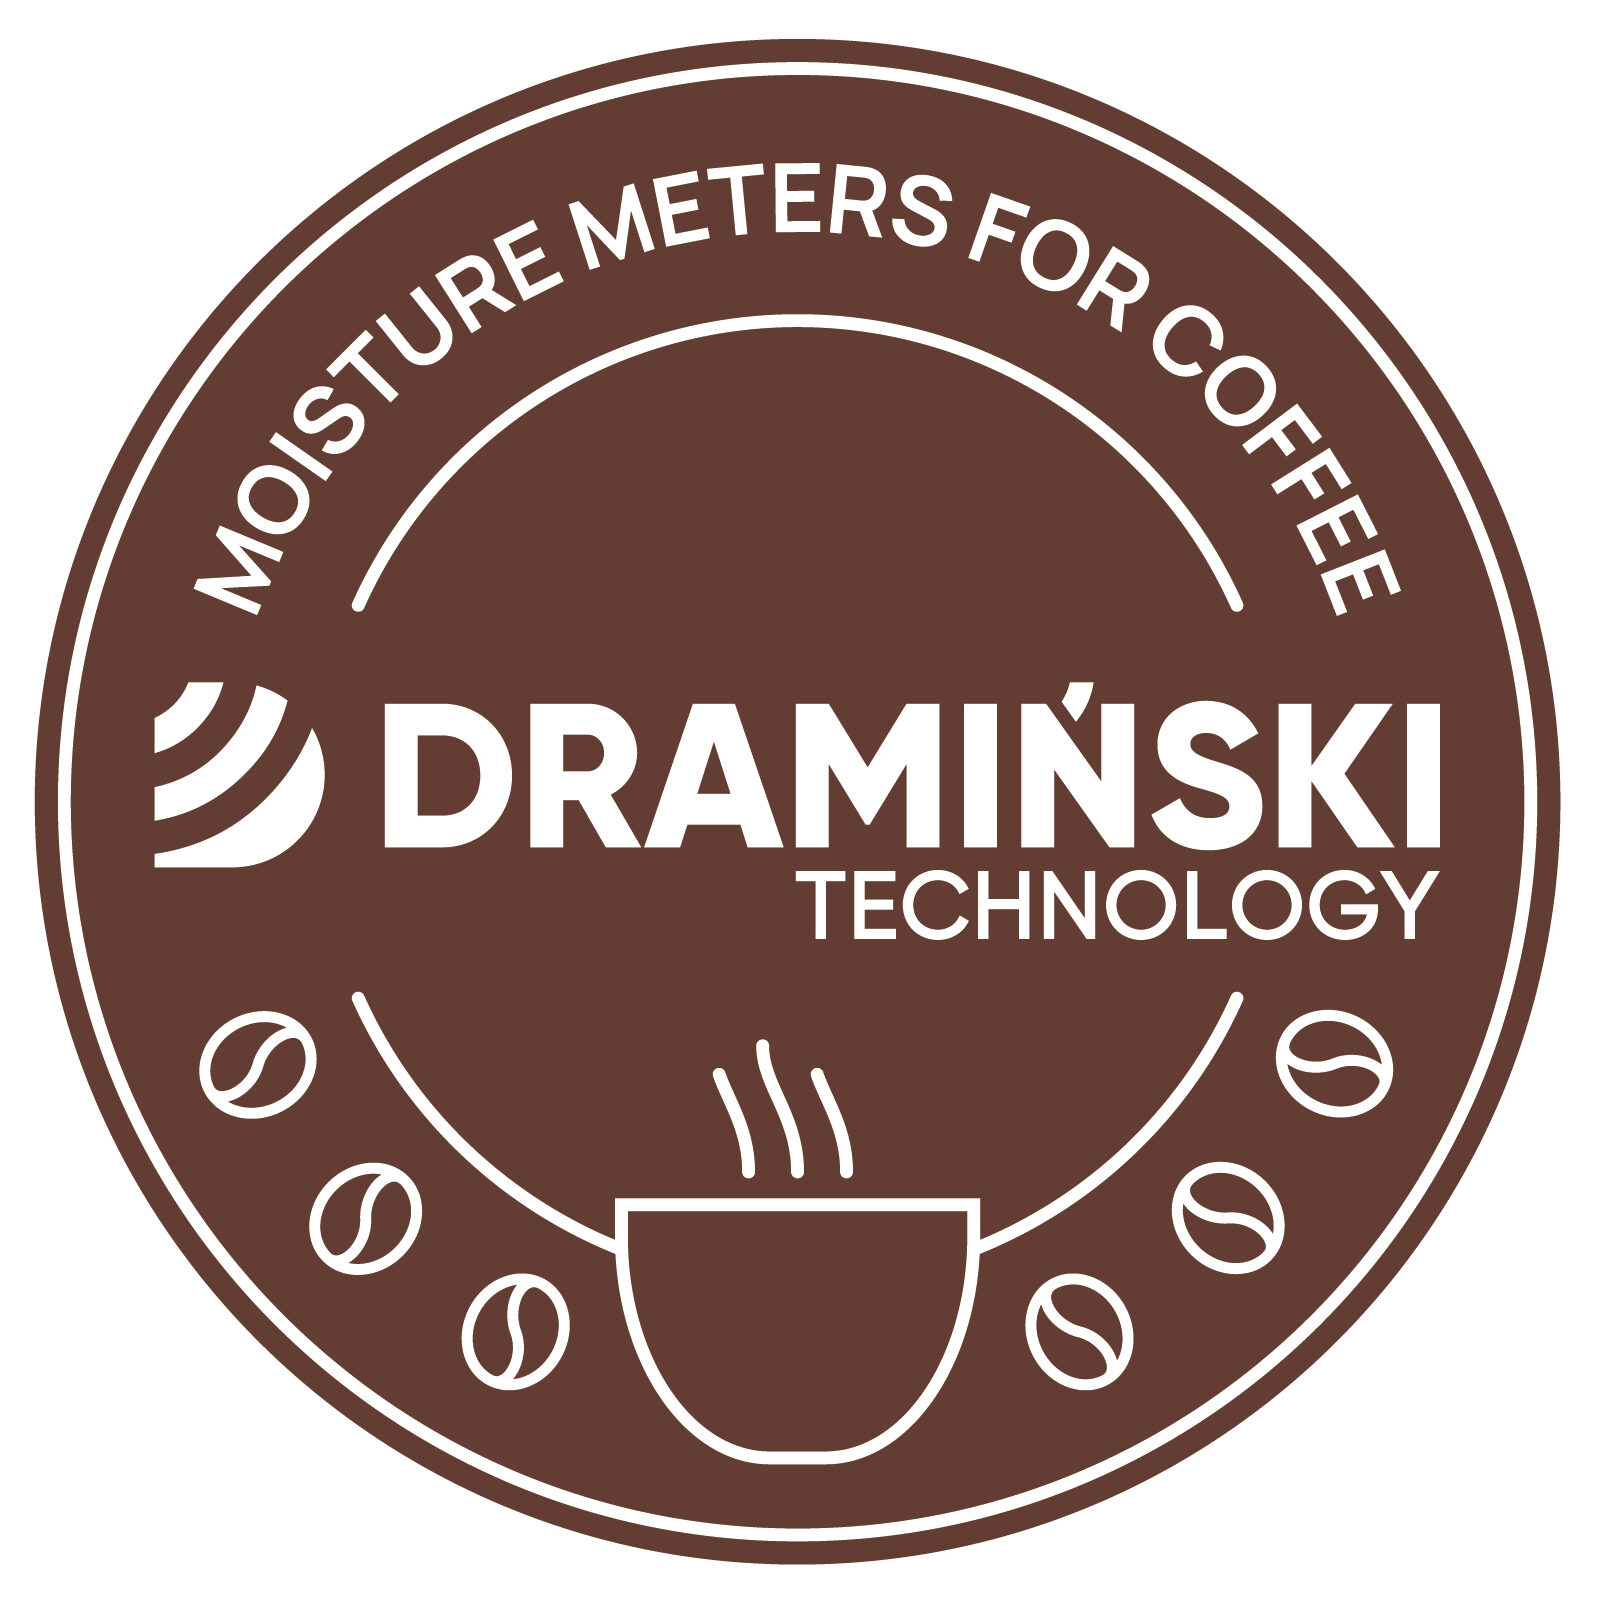 Dramiński Technology